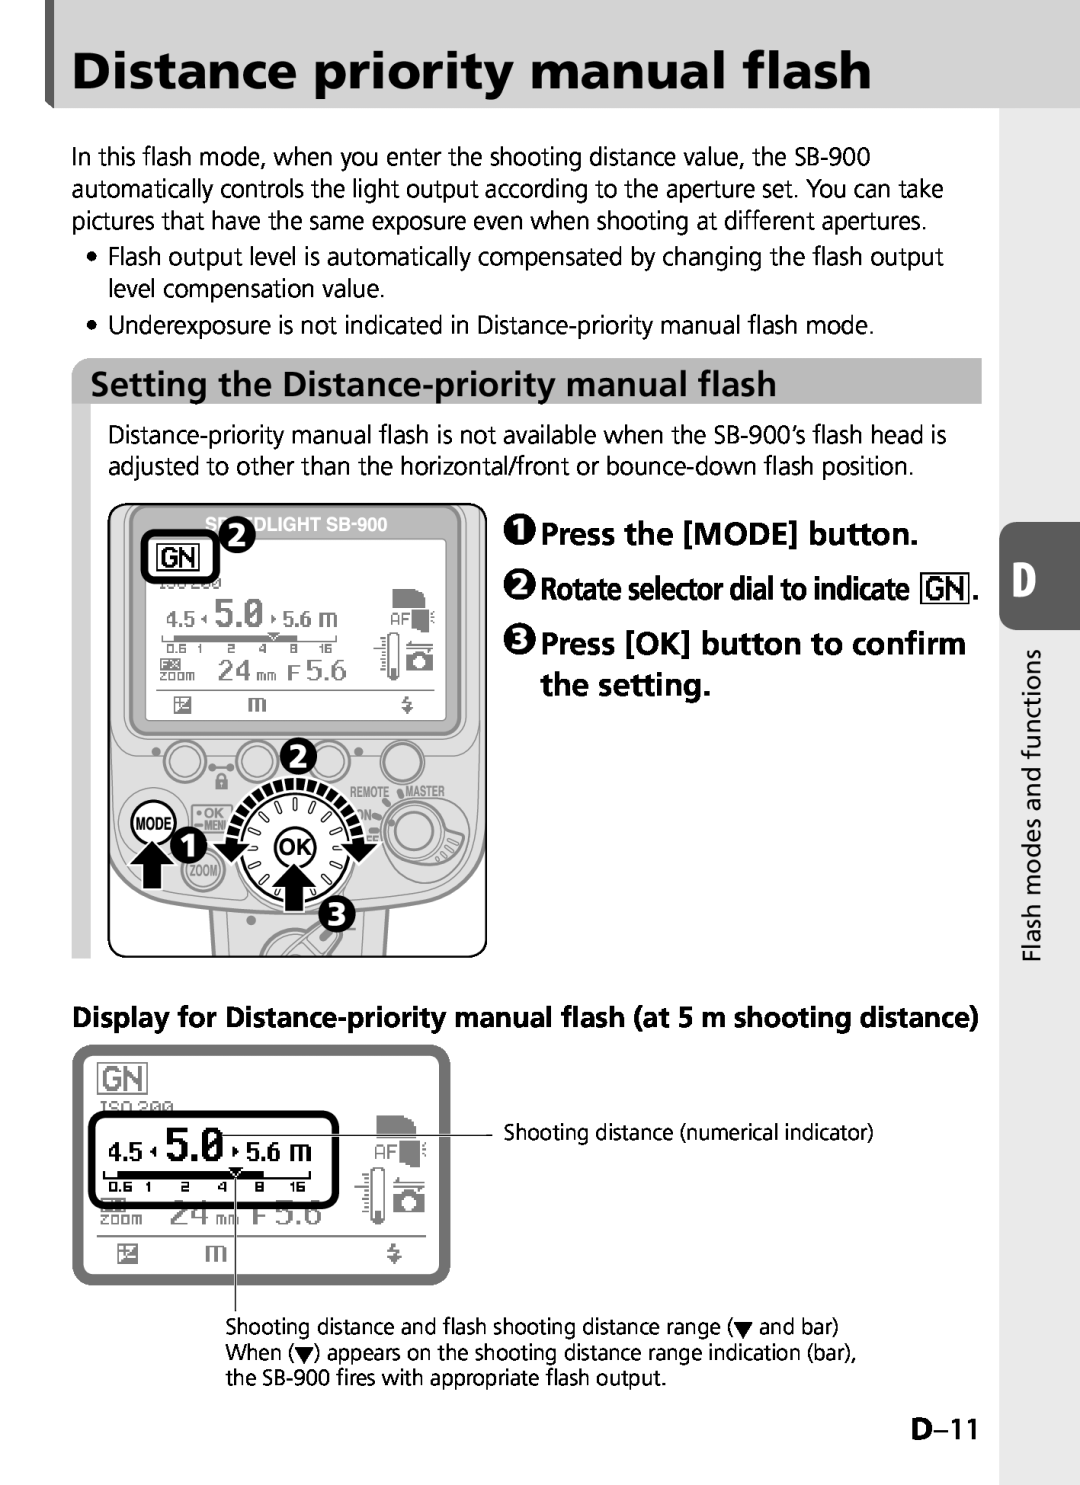 Univex SB-900 Distance priority manual flash, Setting the Distance-prioritymanual flash, D–11, Press the MODE button 